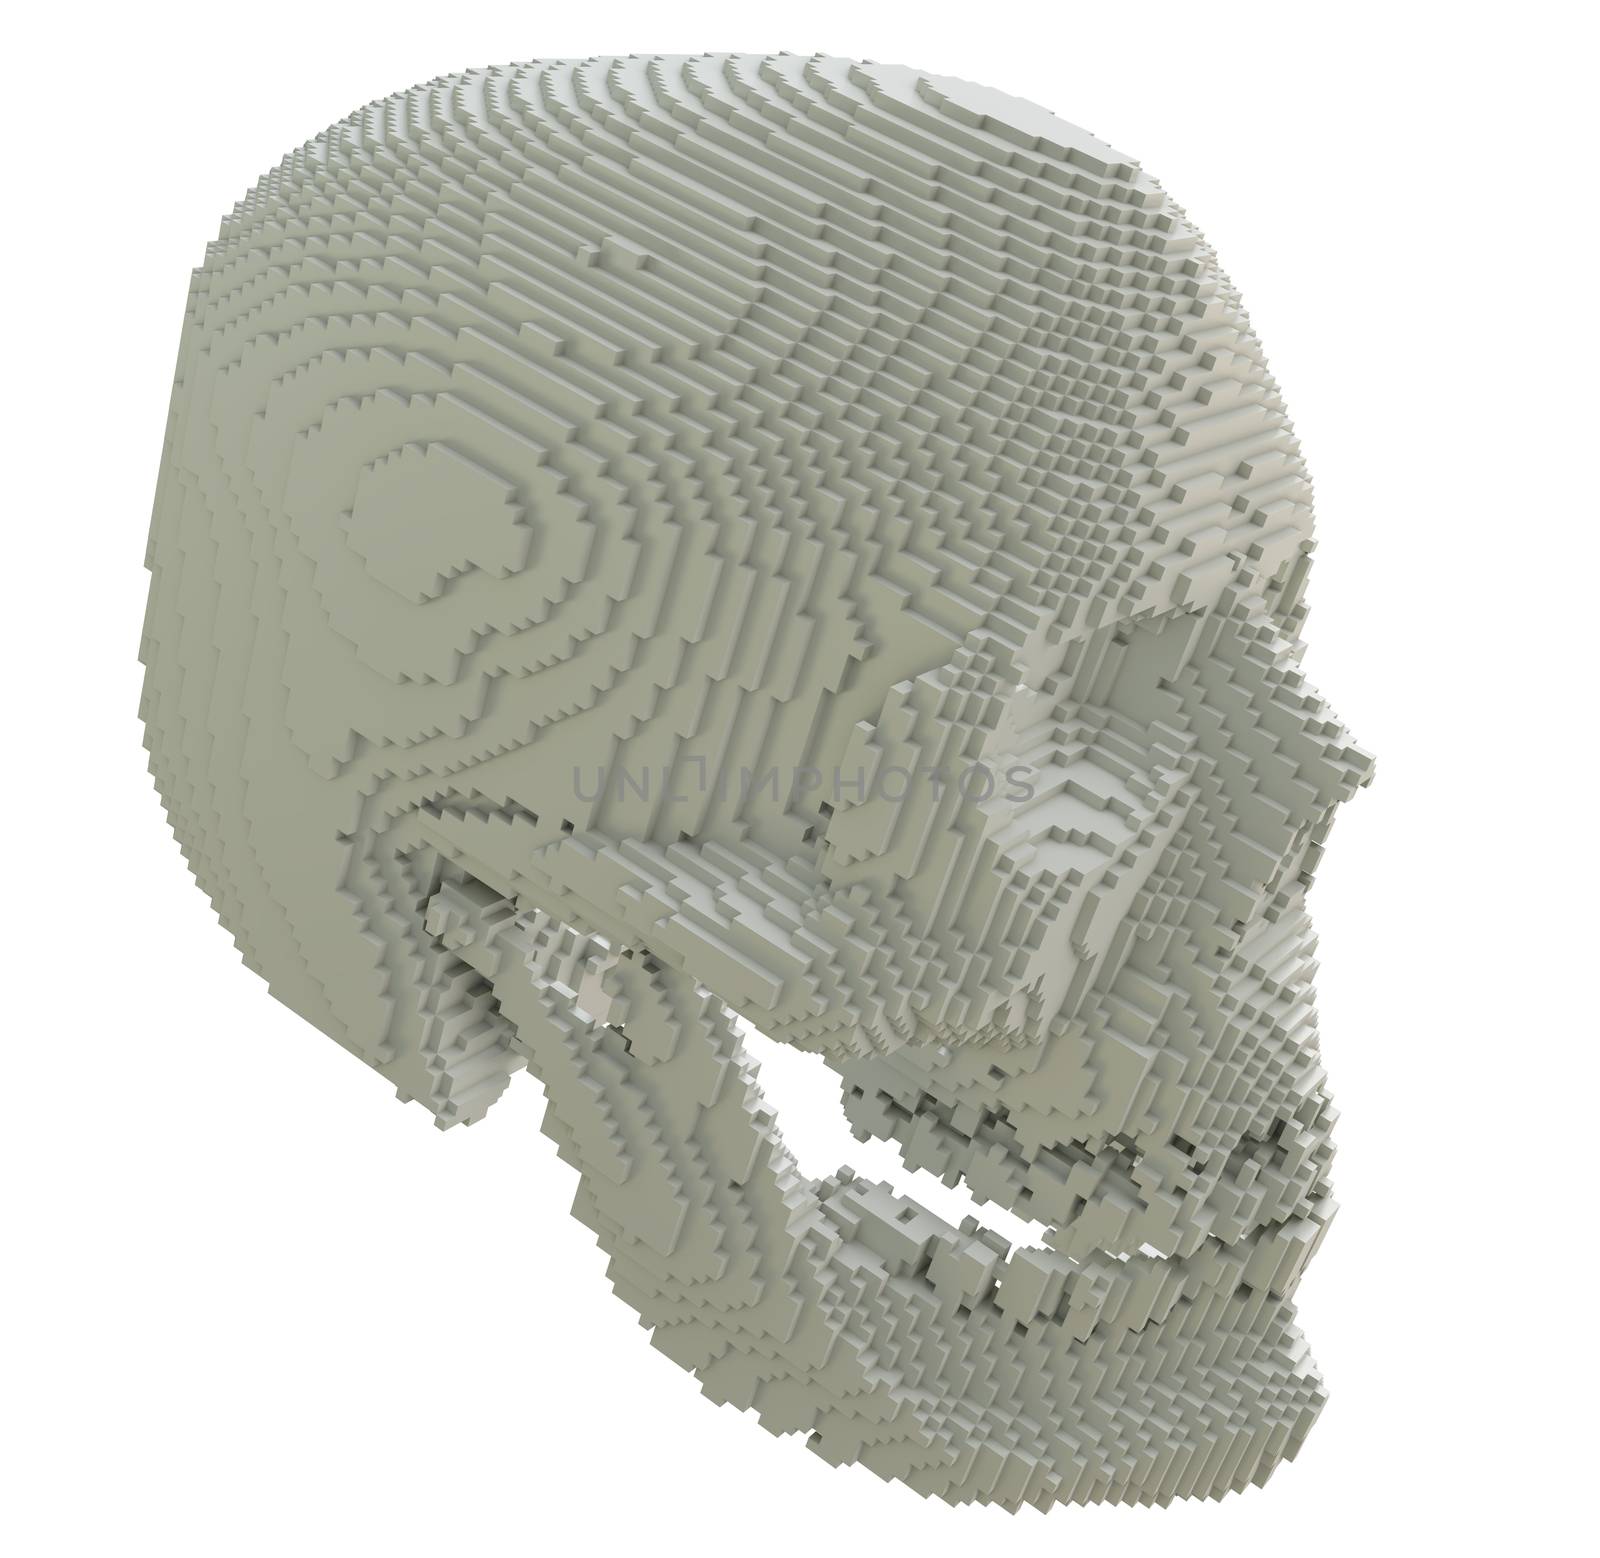 3d printed skull isolated on white background. 3D illustration